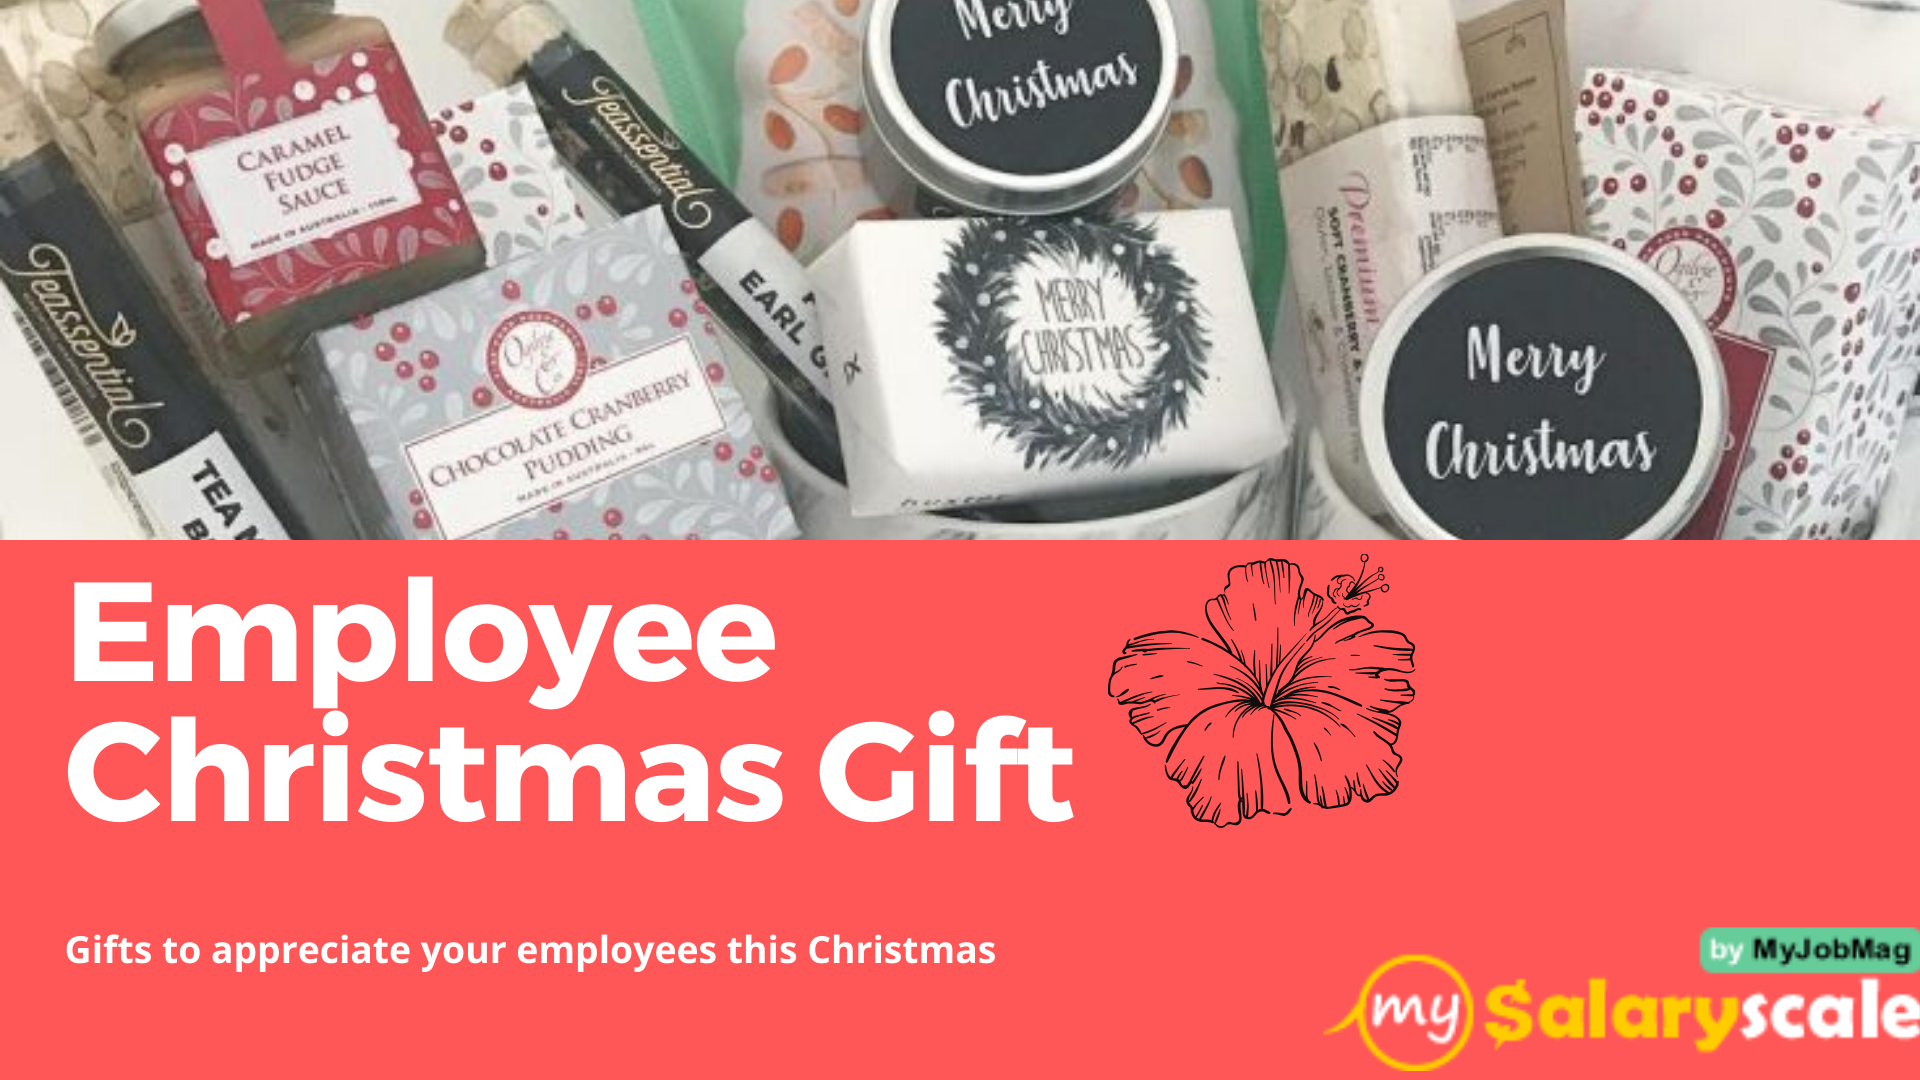 Employee Christmas Benefits That Make The Holiday Fun